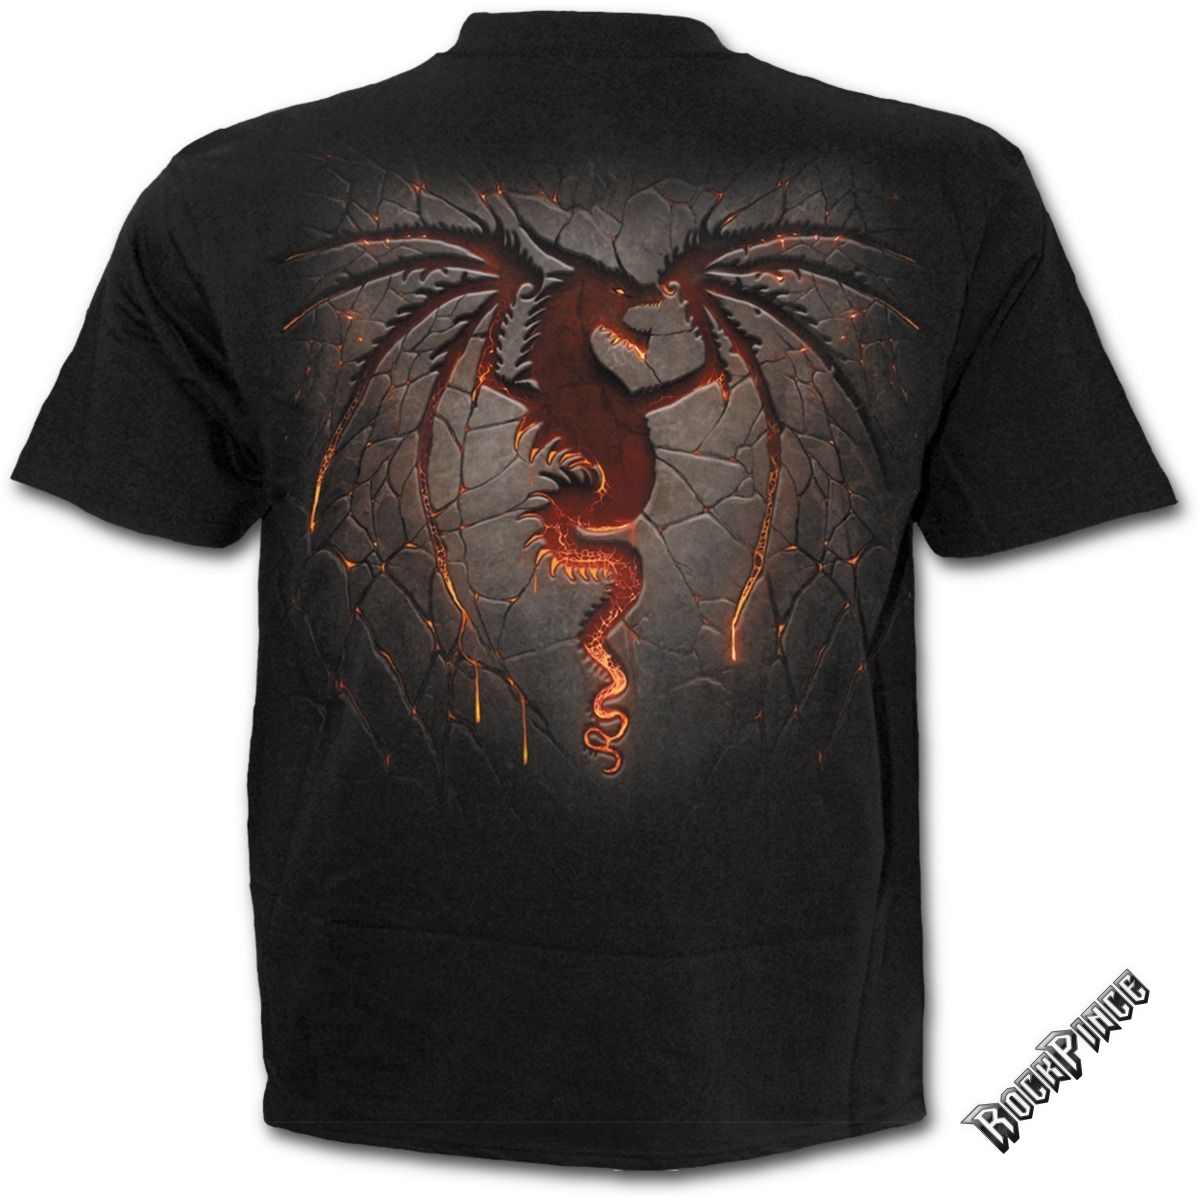 DRAGON FURNACE - T-Shirt Black - L016M101